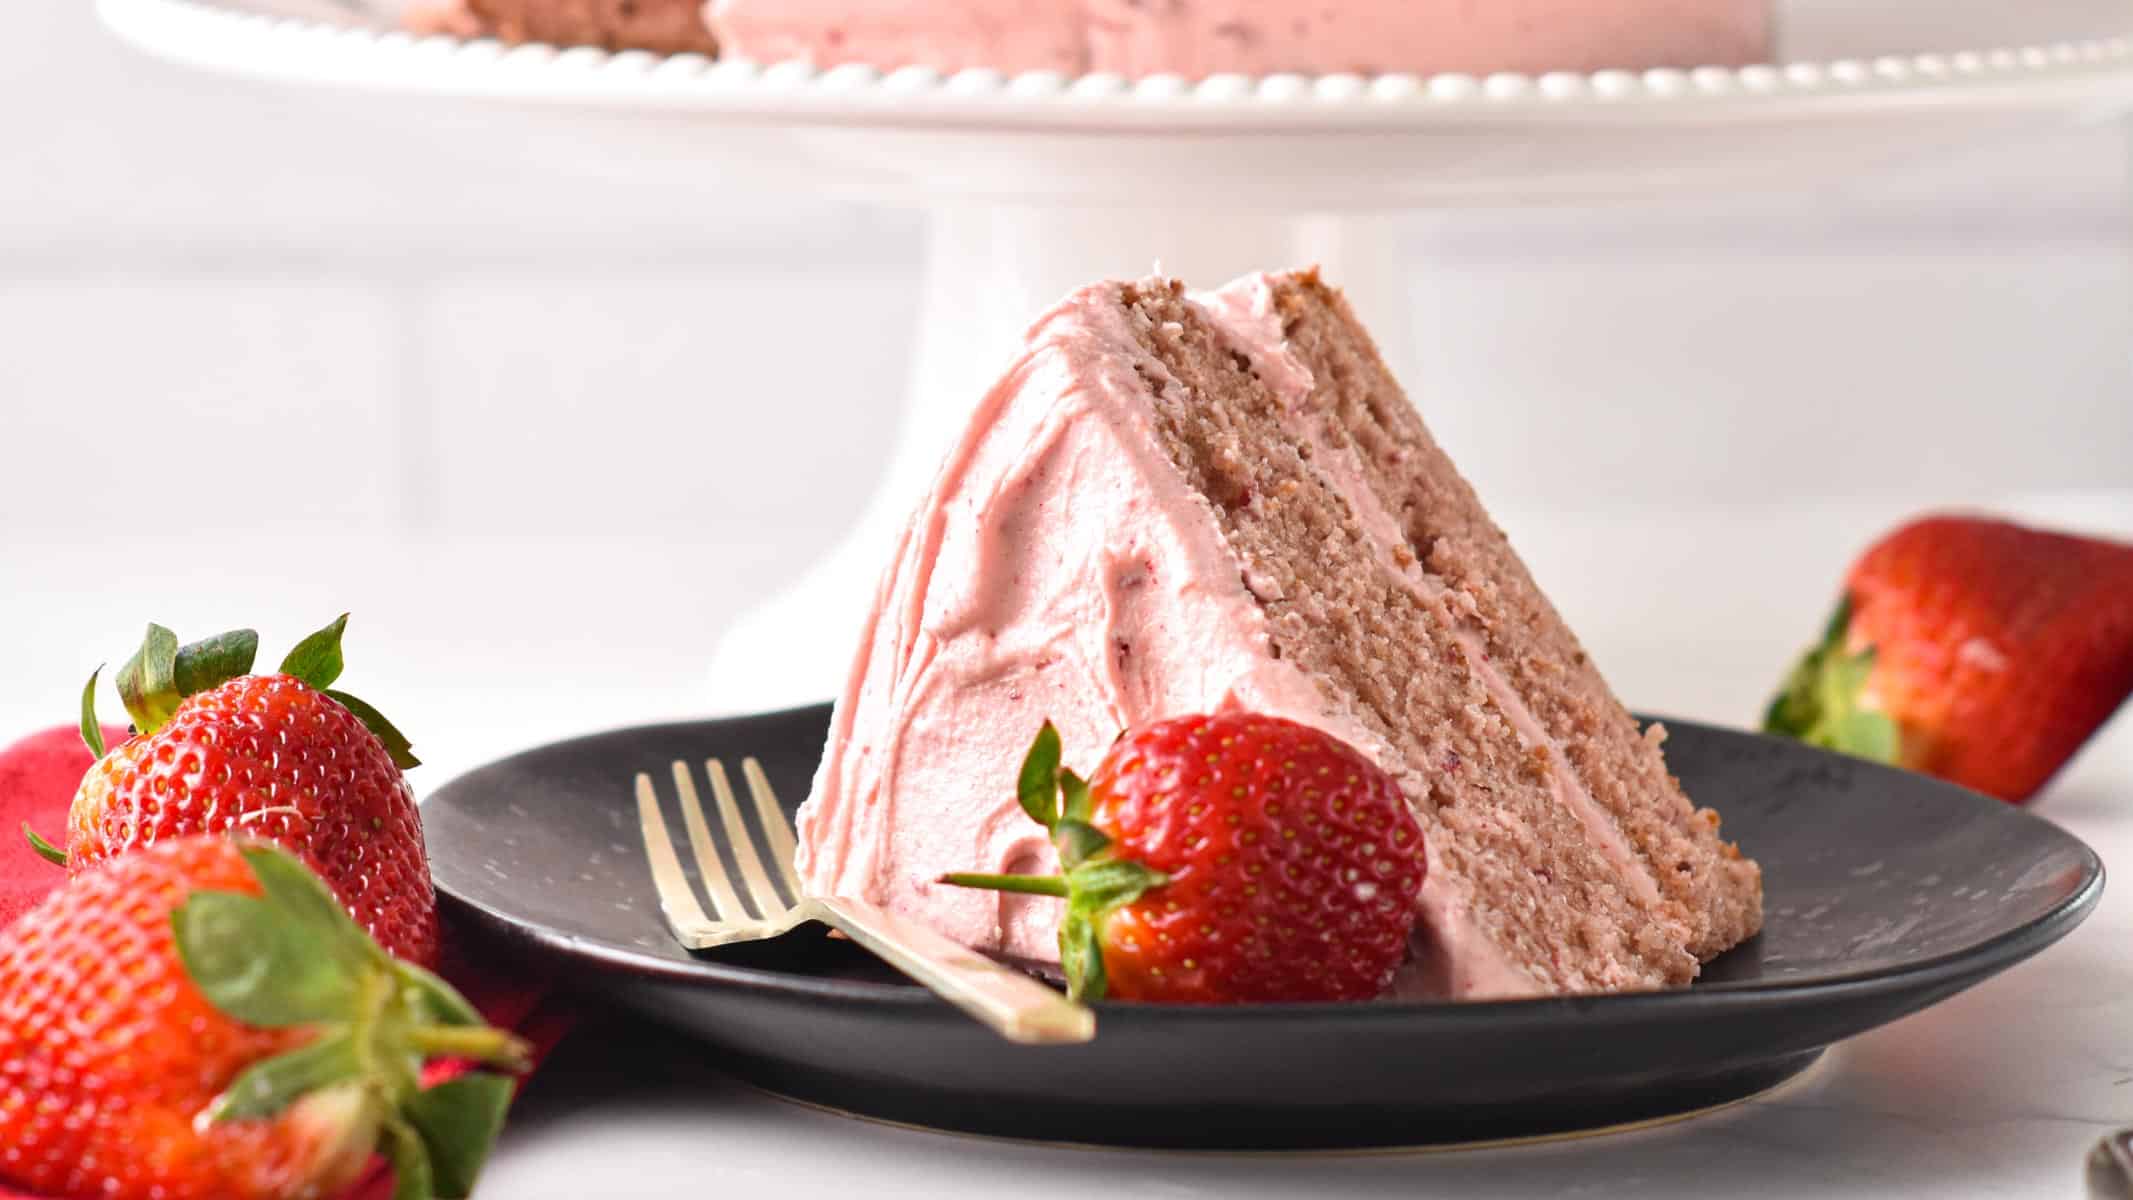 Vegan Strawberry Cake